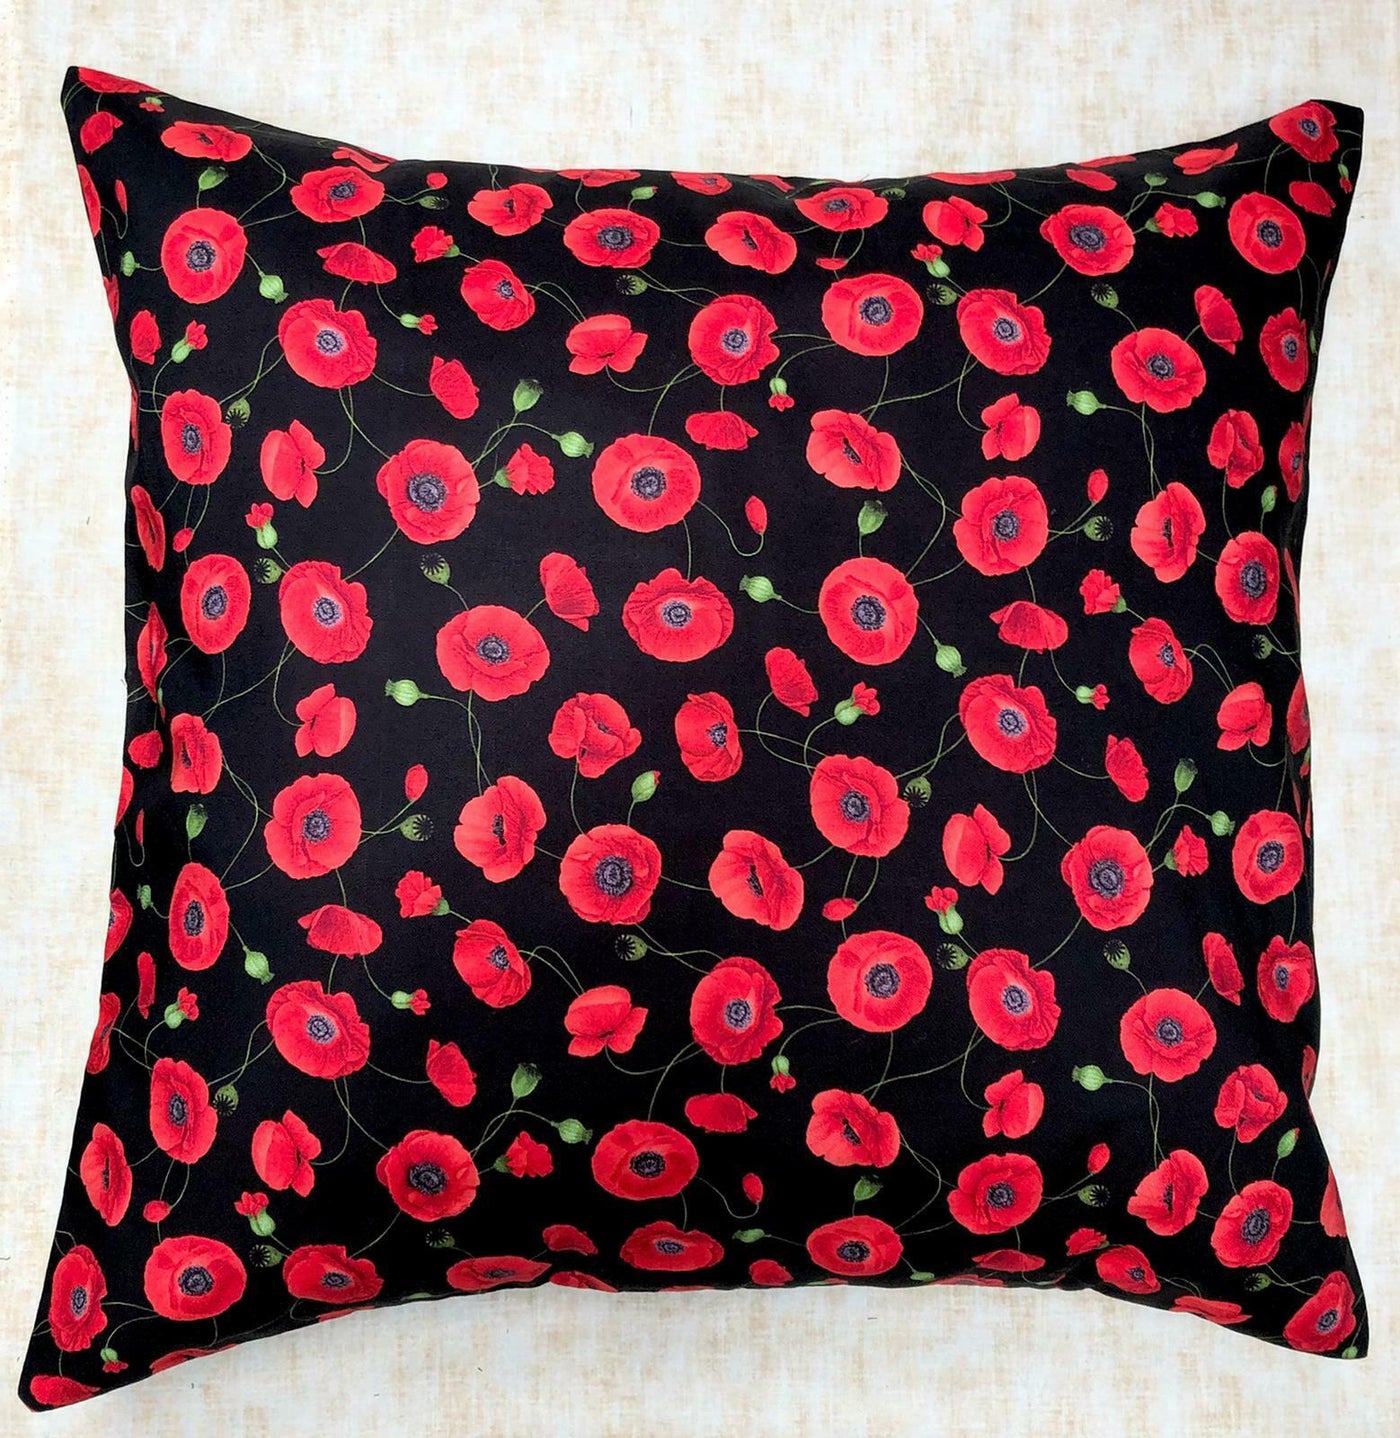 Poppy Flower of Armistice Rememberance Cushion Cover Case fits 18" x 18" Cotton